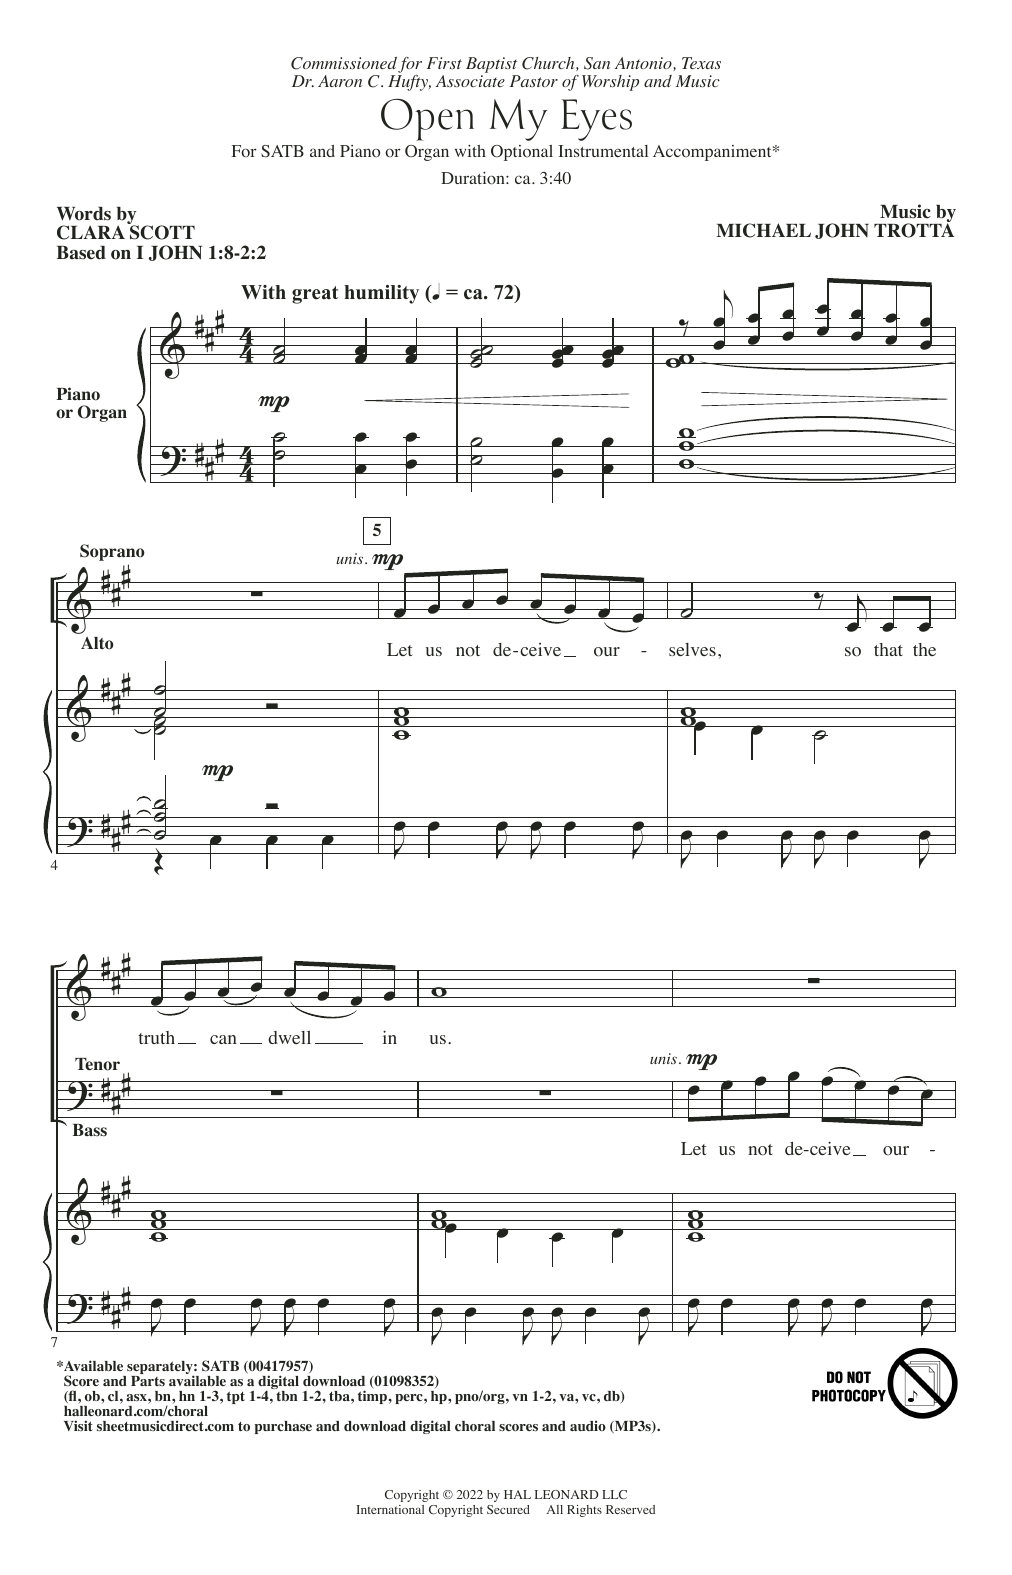 Clara Scott and Michael John Trotta Open My Eyes Sheet Music Notes & Chords for SATB Choir - Download or Print PDF